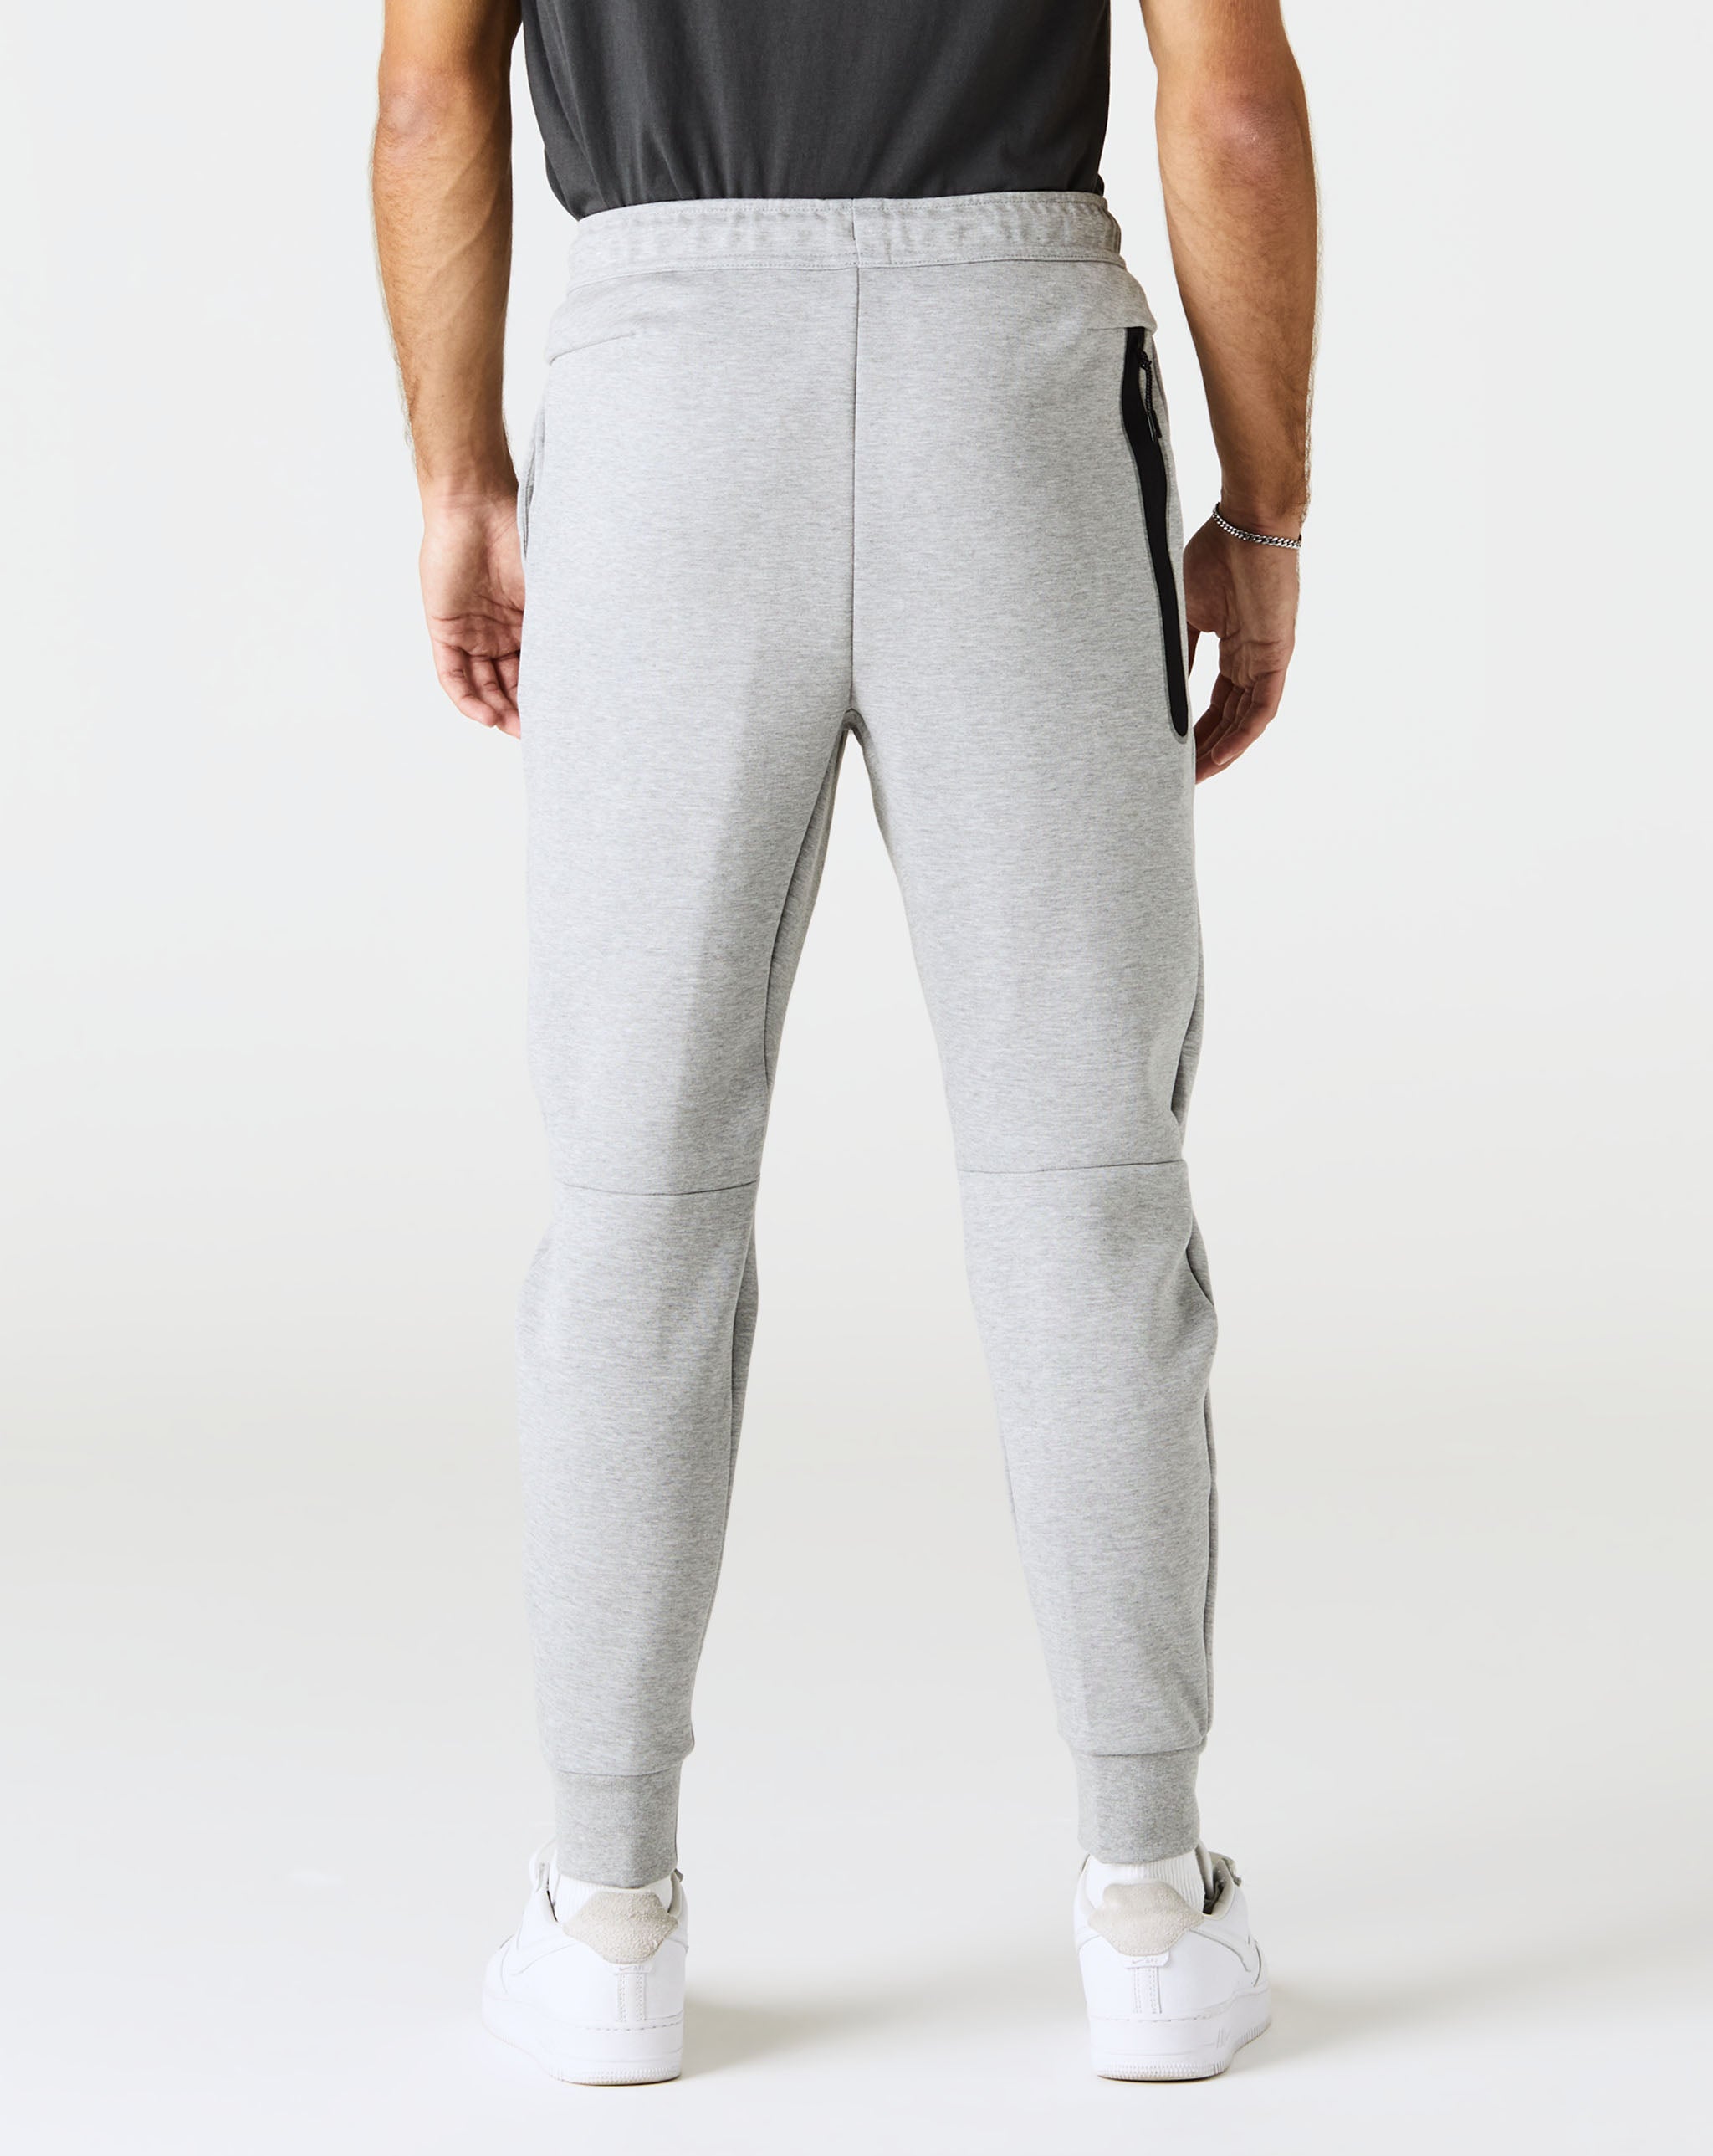 Mens Tech Fleece Pants & Tights. Nike.com